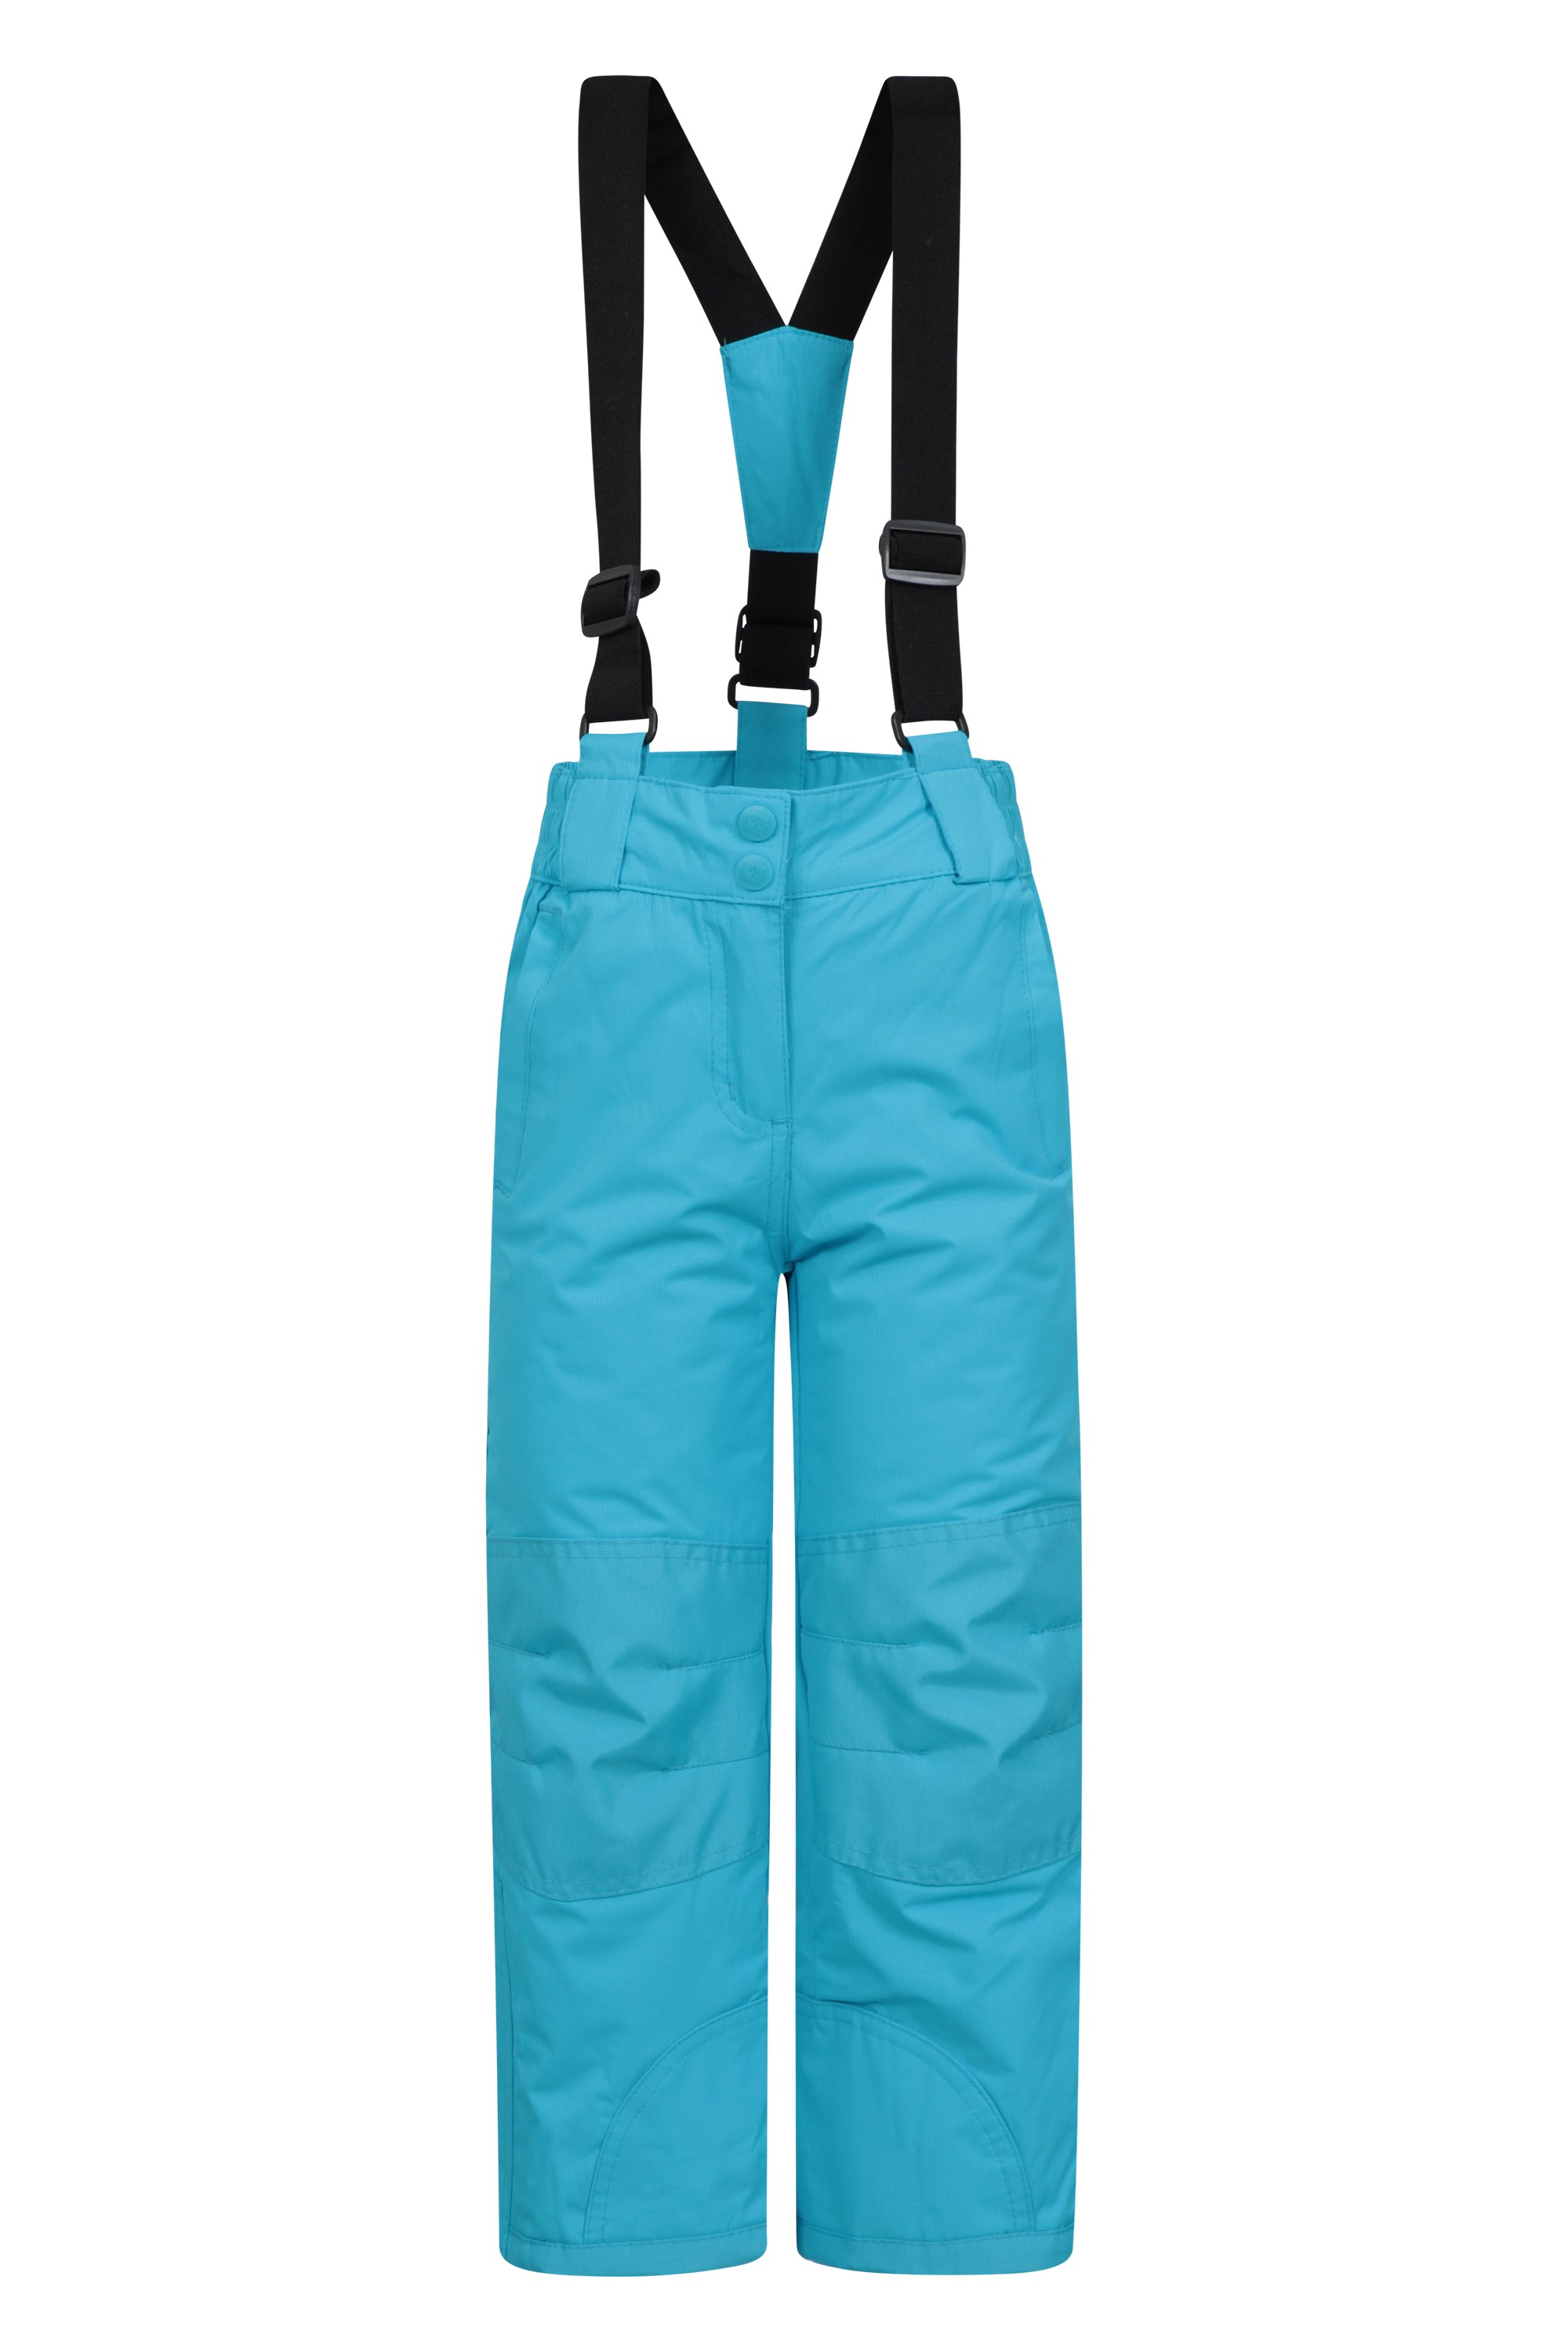 Mountain Warehouse Mens Waterproof Ski Pants Salopettes Winter Trousers Braces 